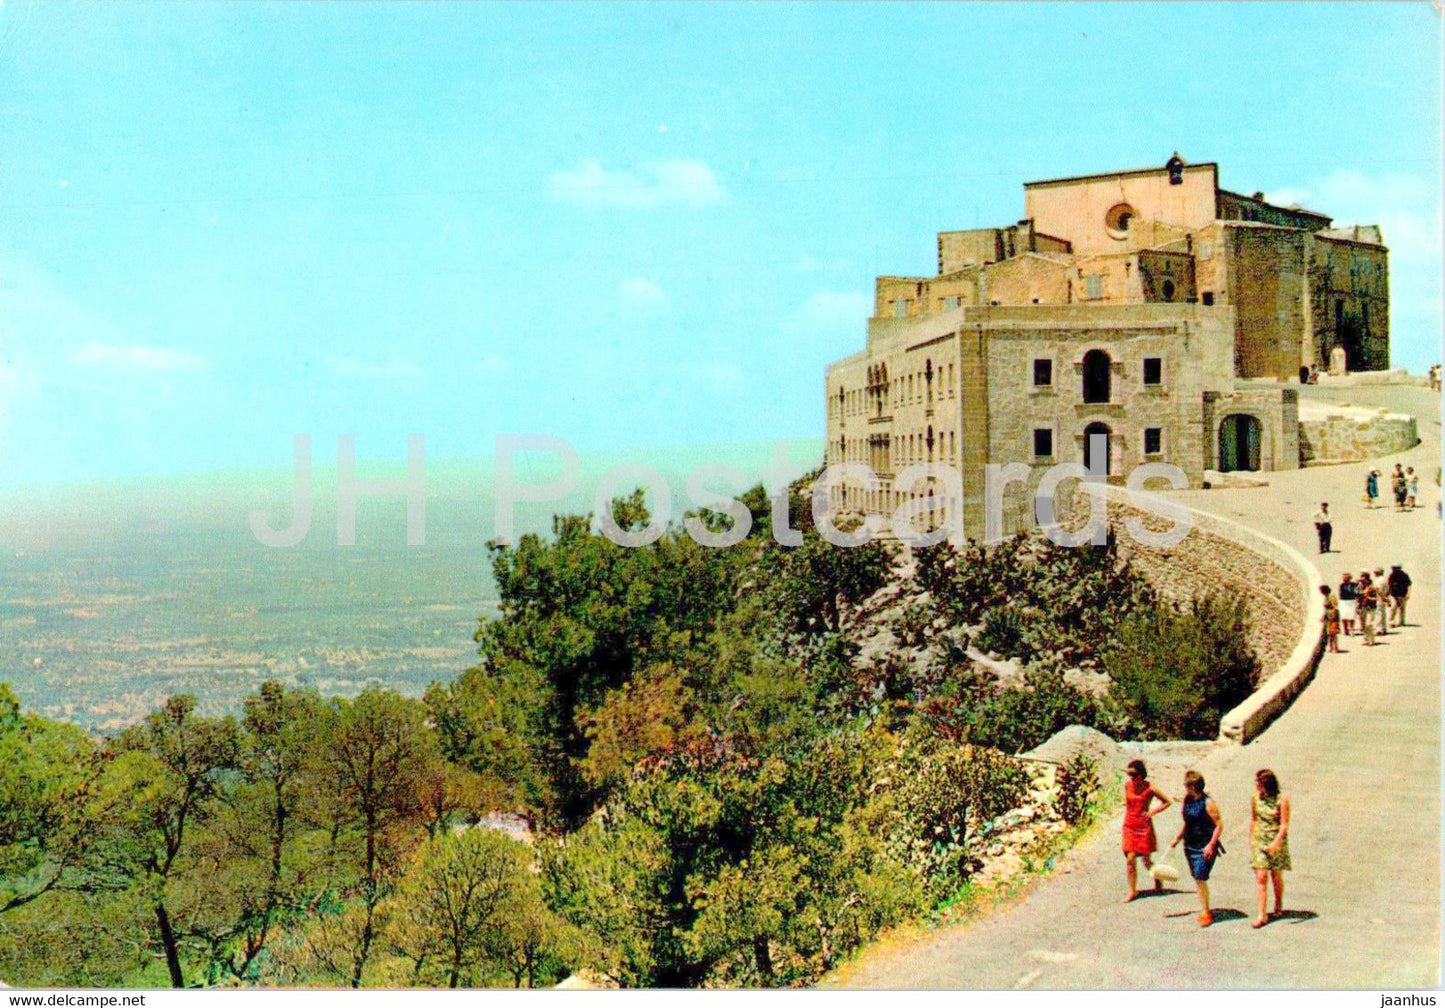 Santuario de San Salvador - Felanitx - Mallorca - 2 - Spain - unused - JH Postcards